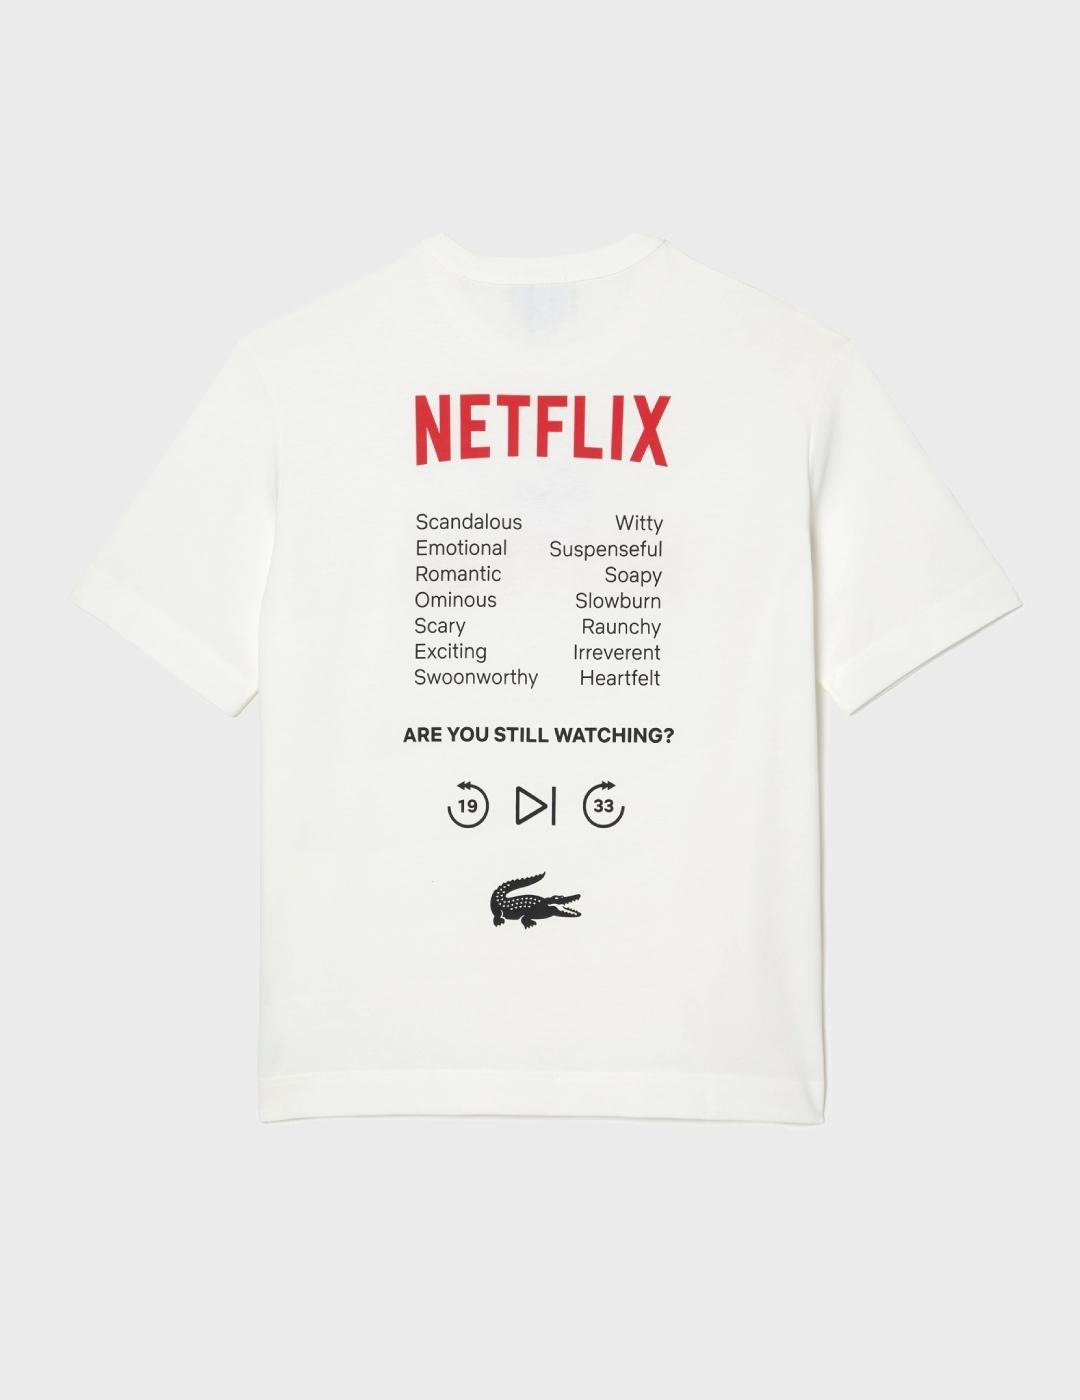 Camiseta Lacoste x Netflix TH7343-00